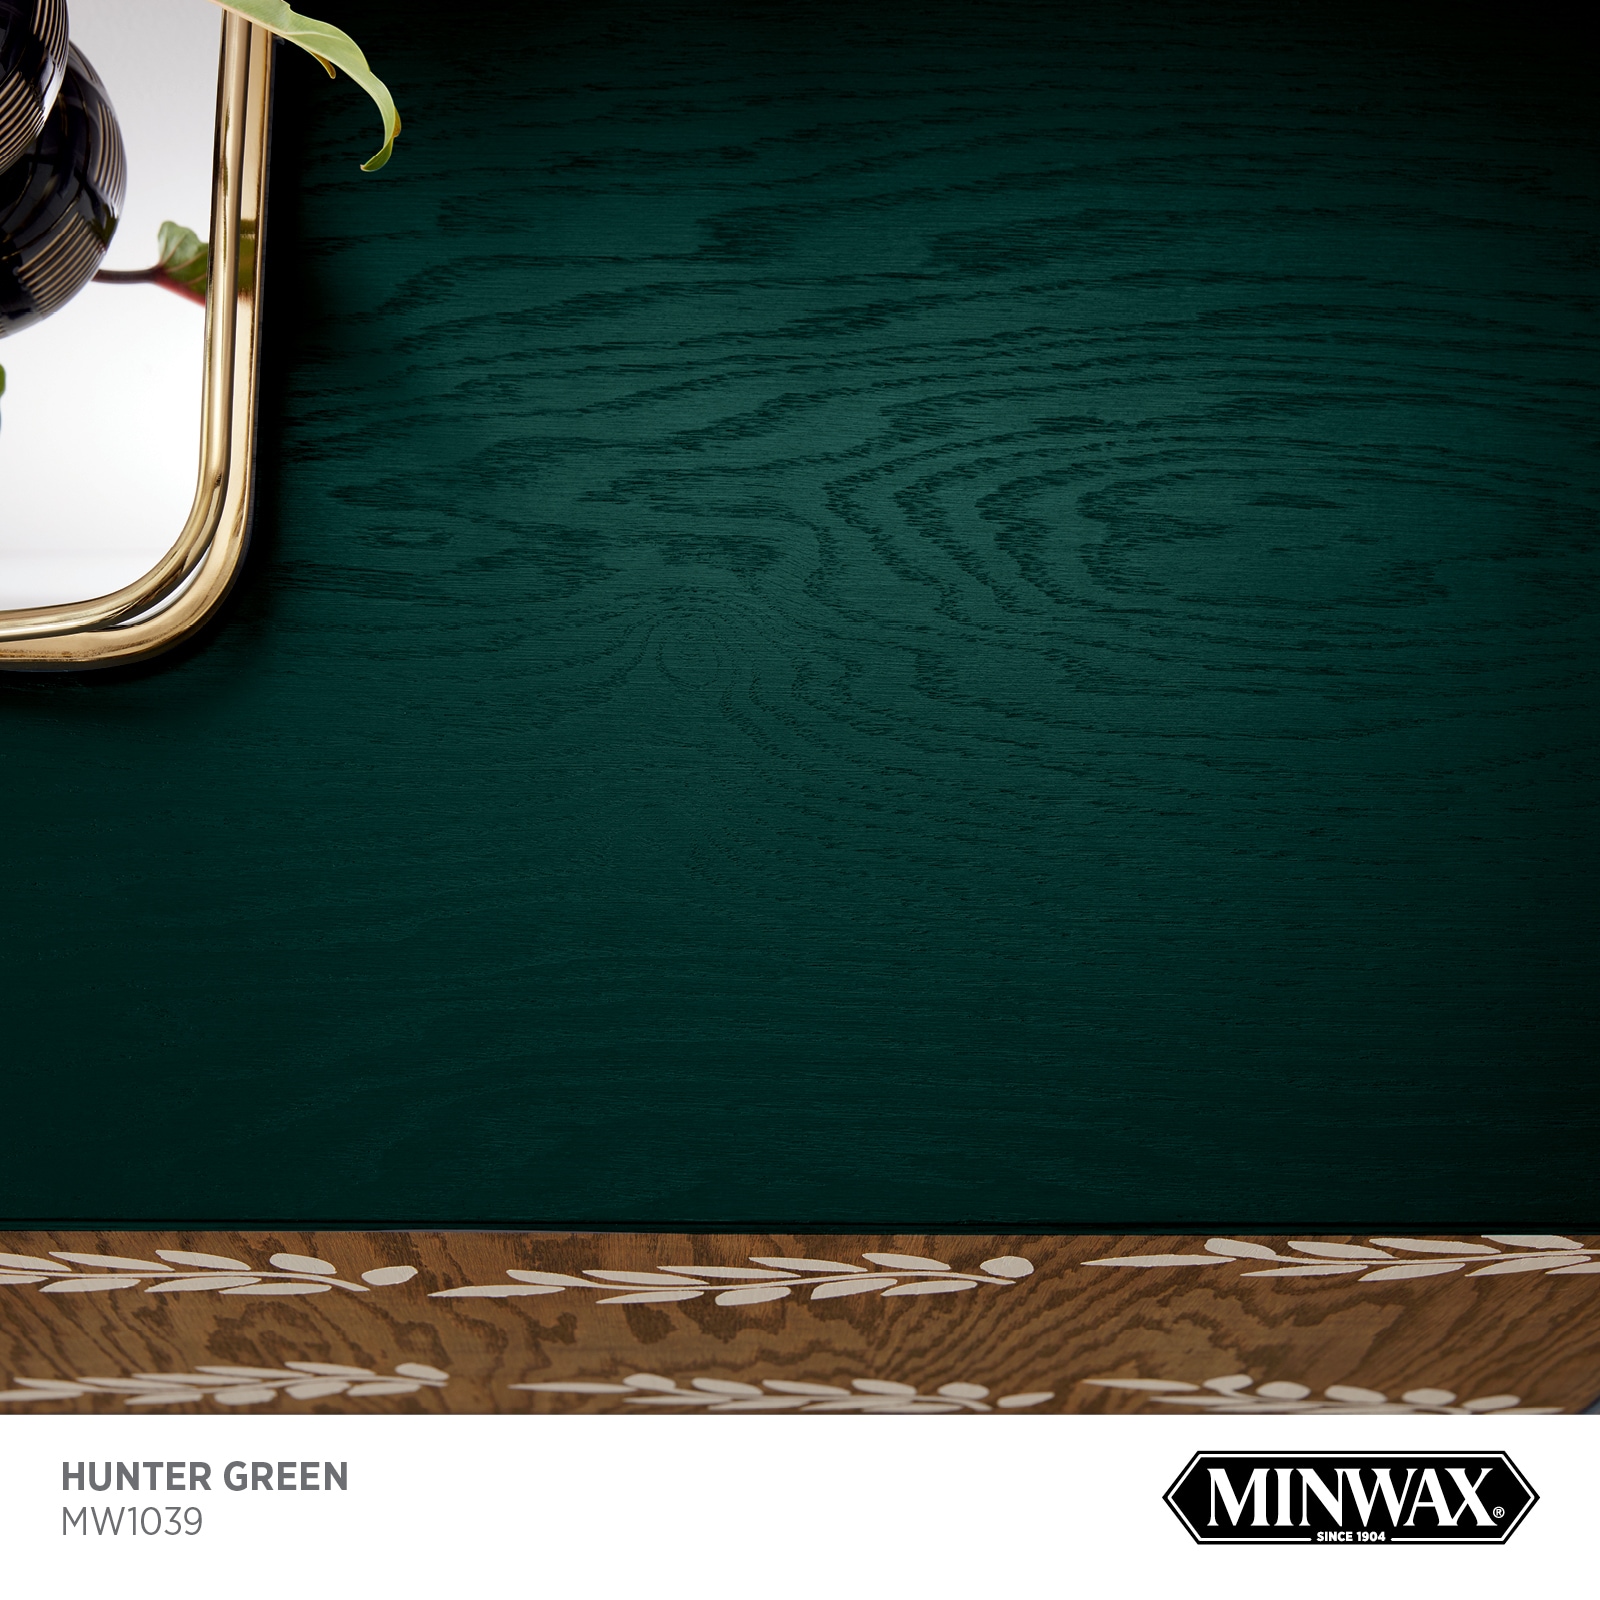 Minwax Wood Finish Water-Based Hunter Green Mw1039 Solid Interior